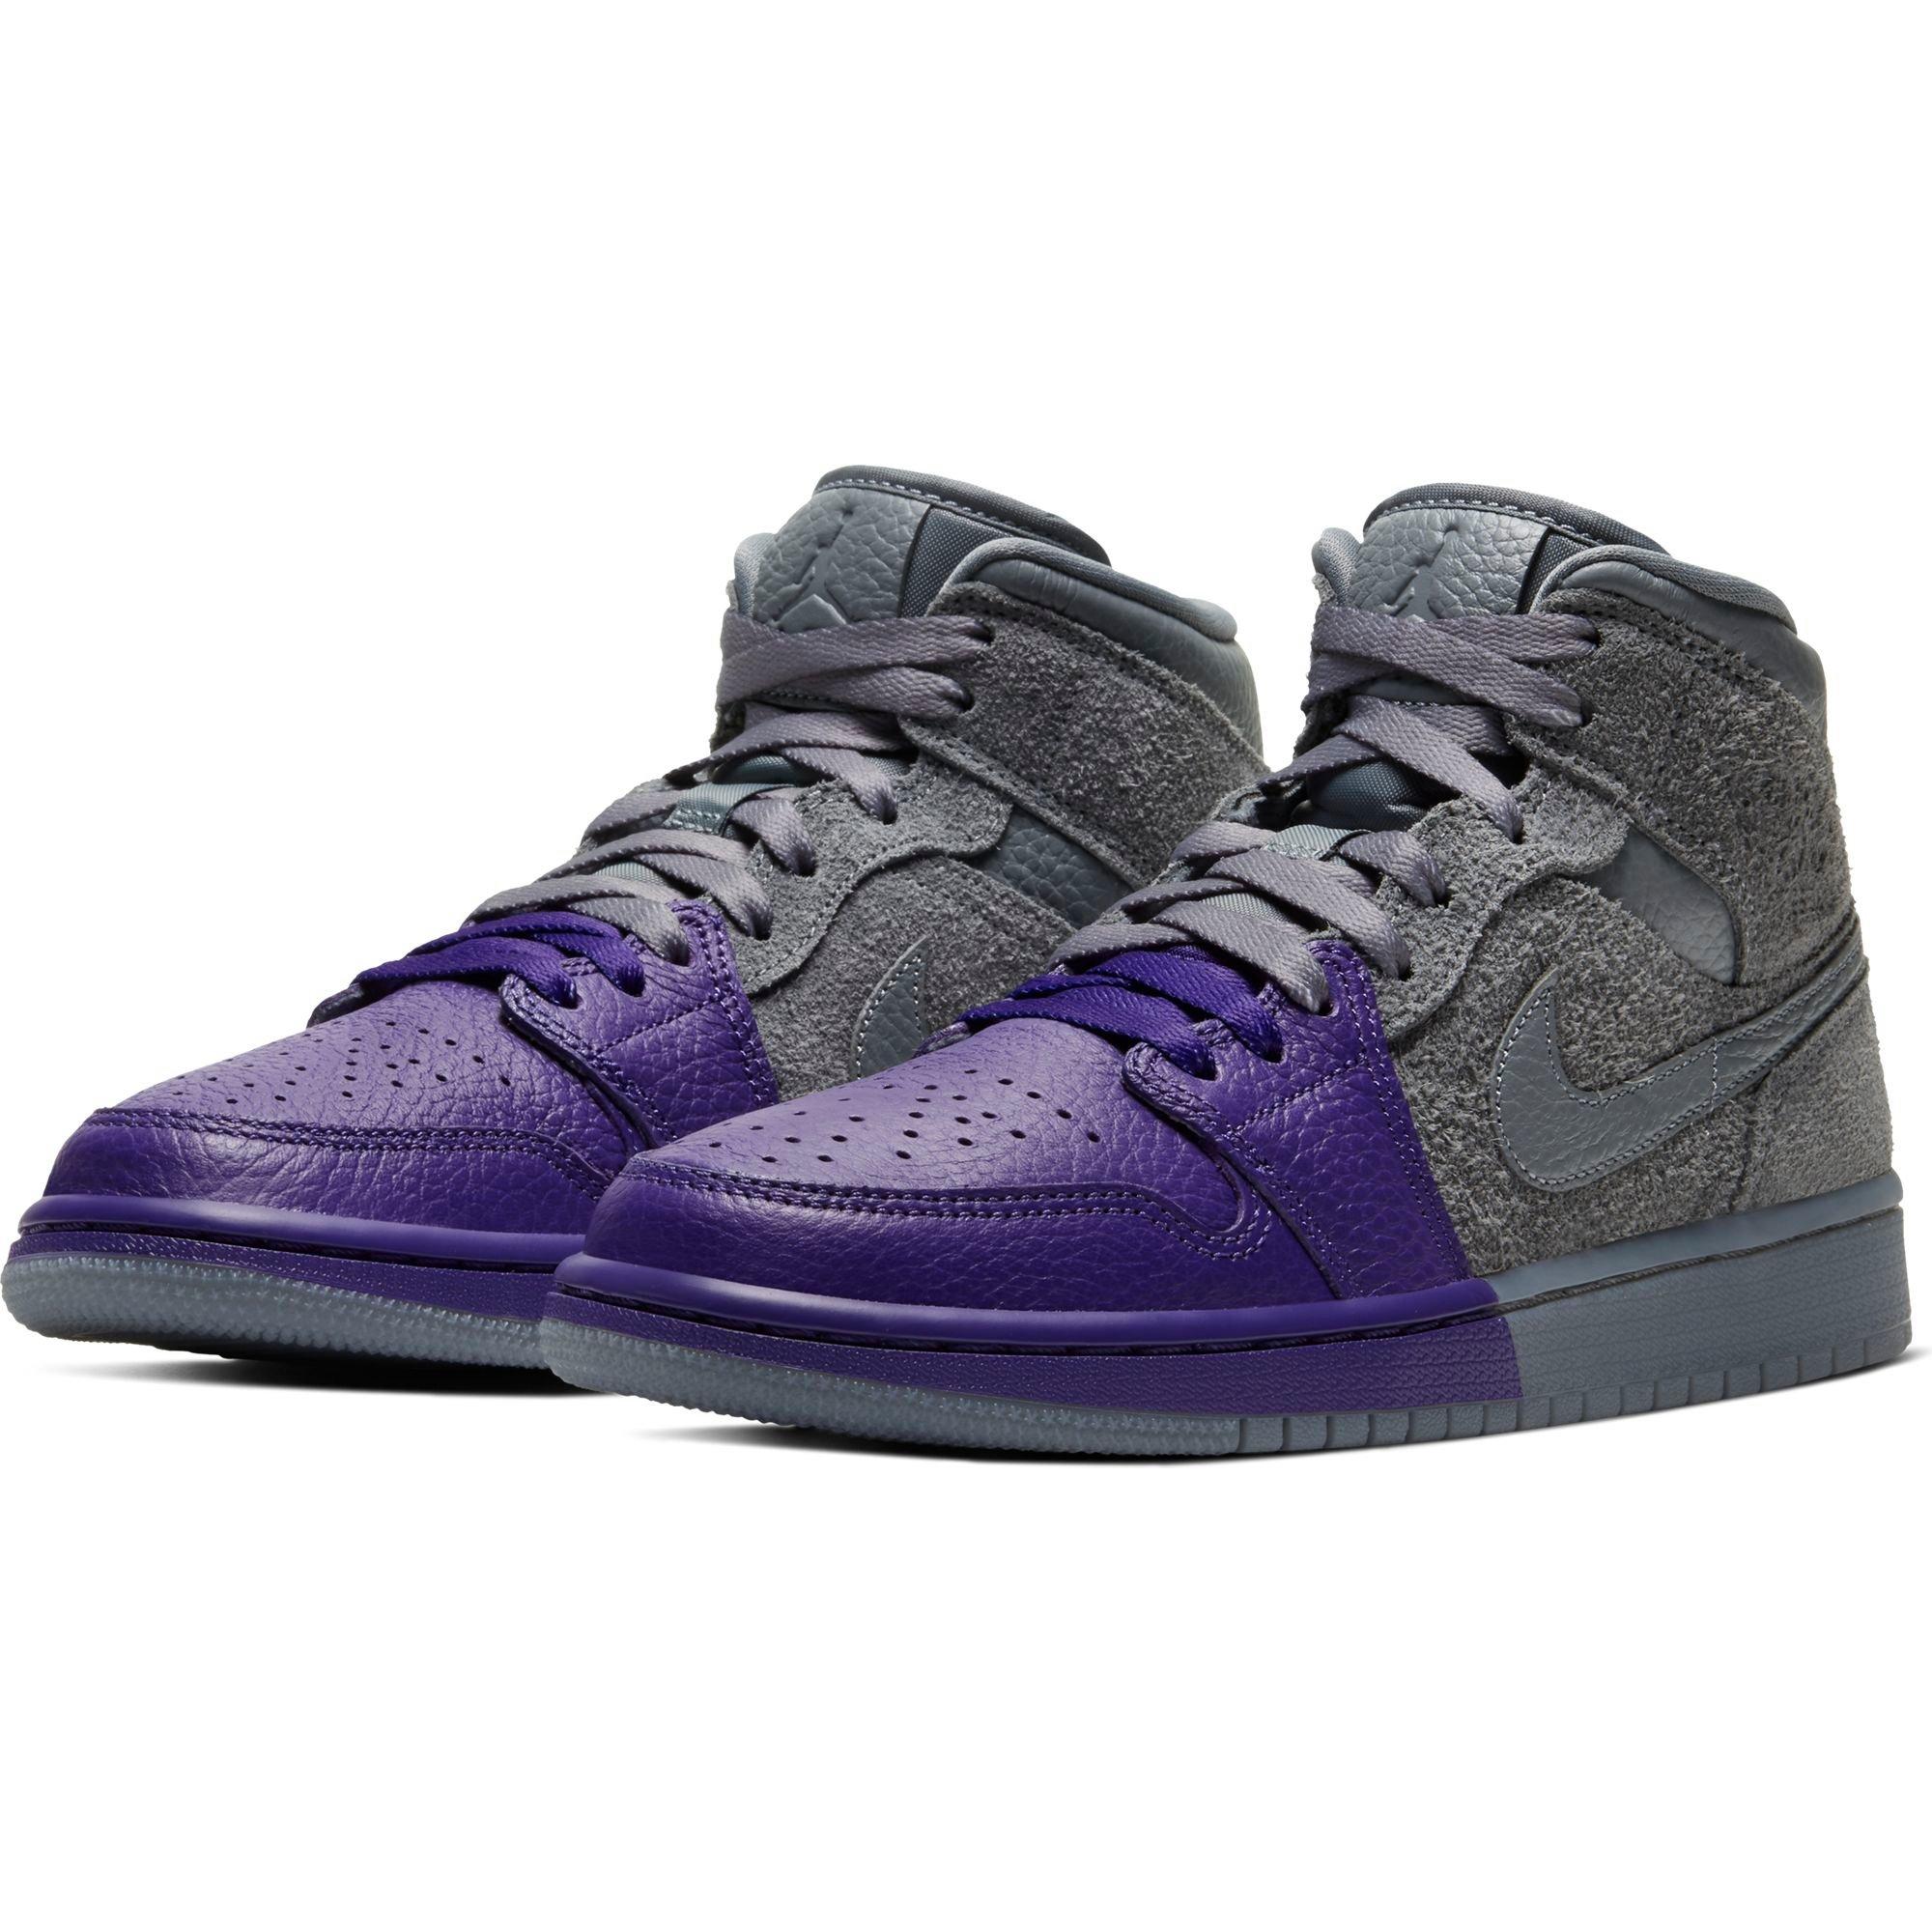 grey and purple jordan 1